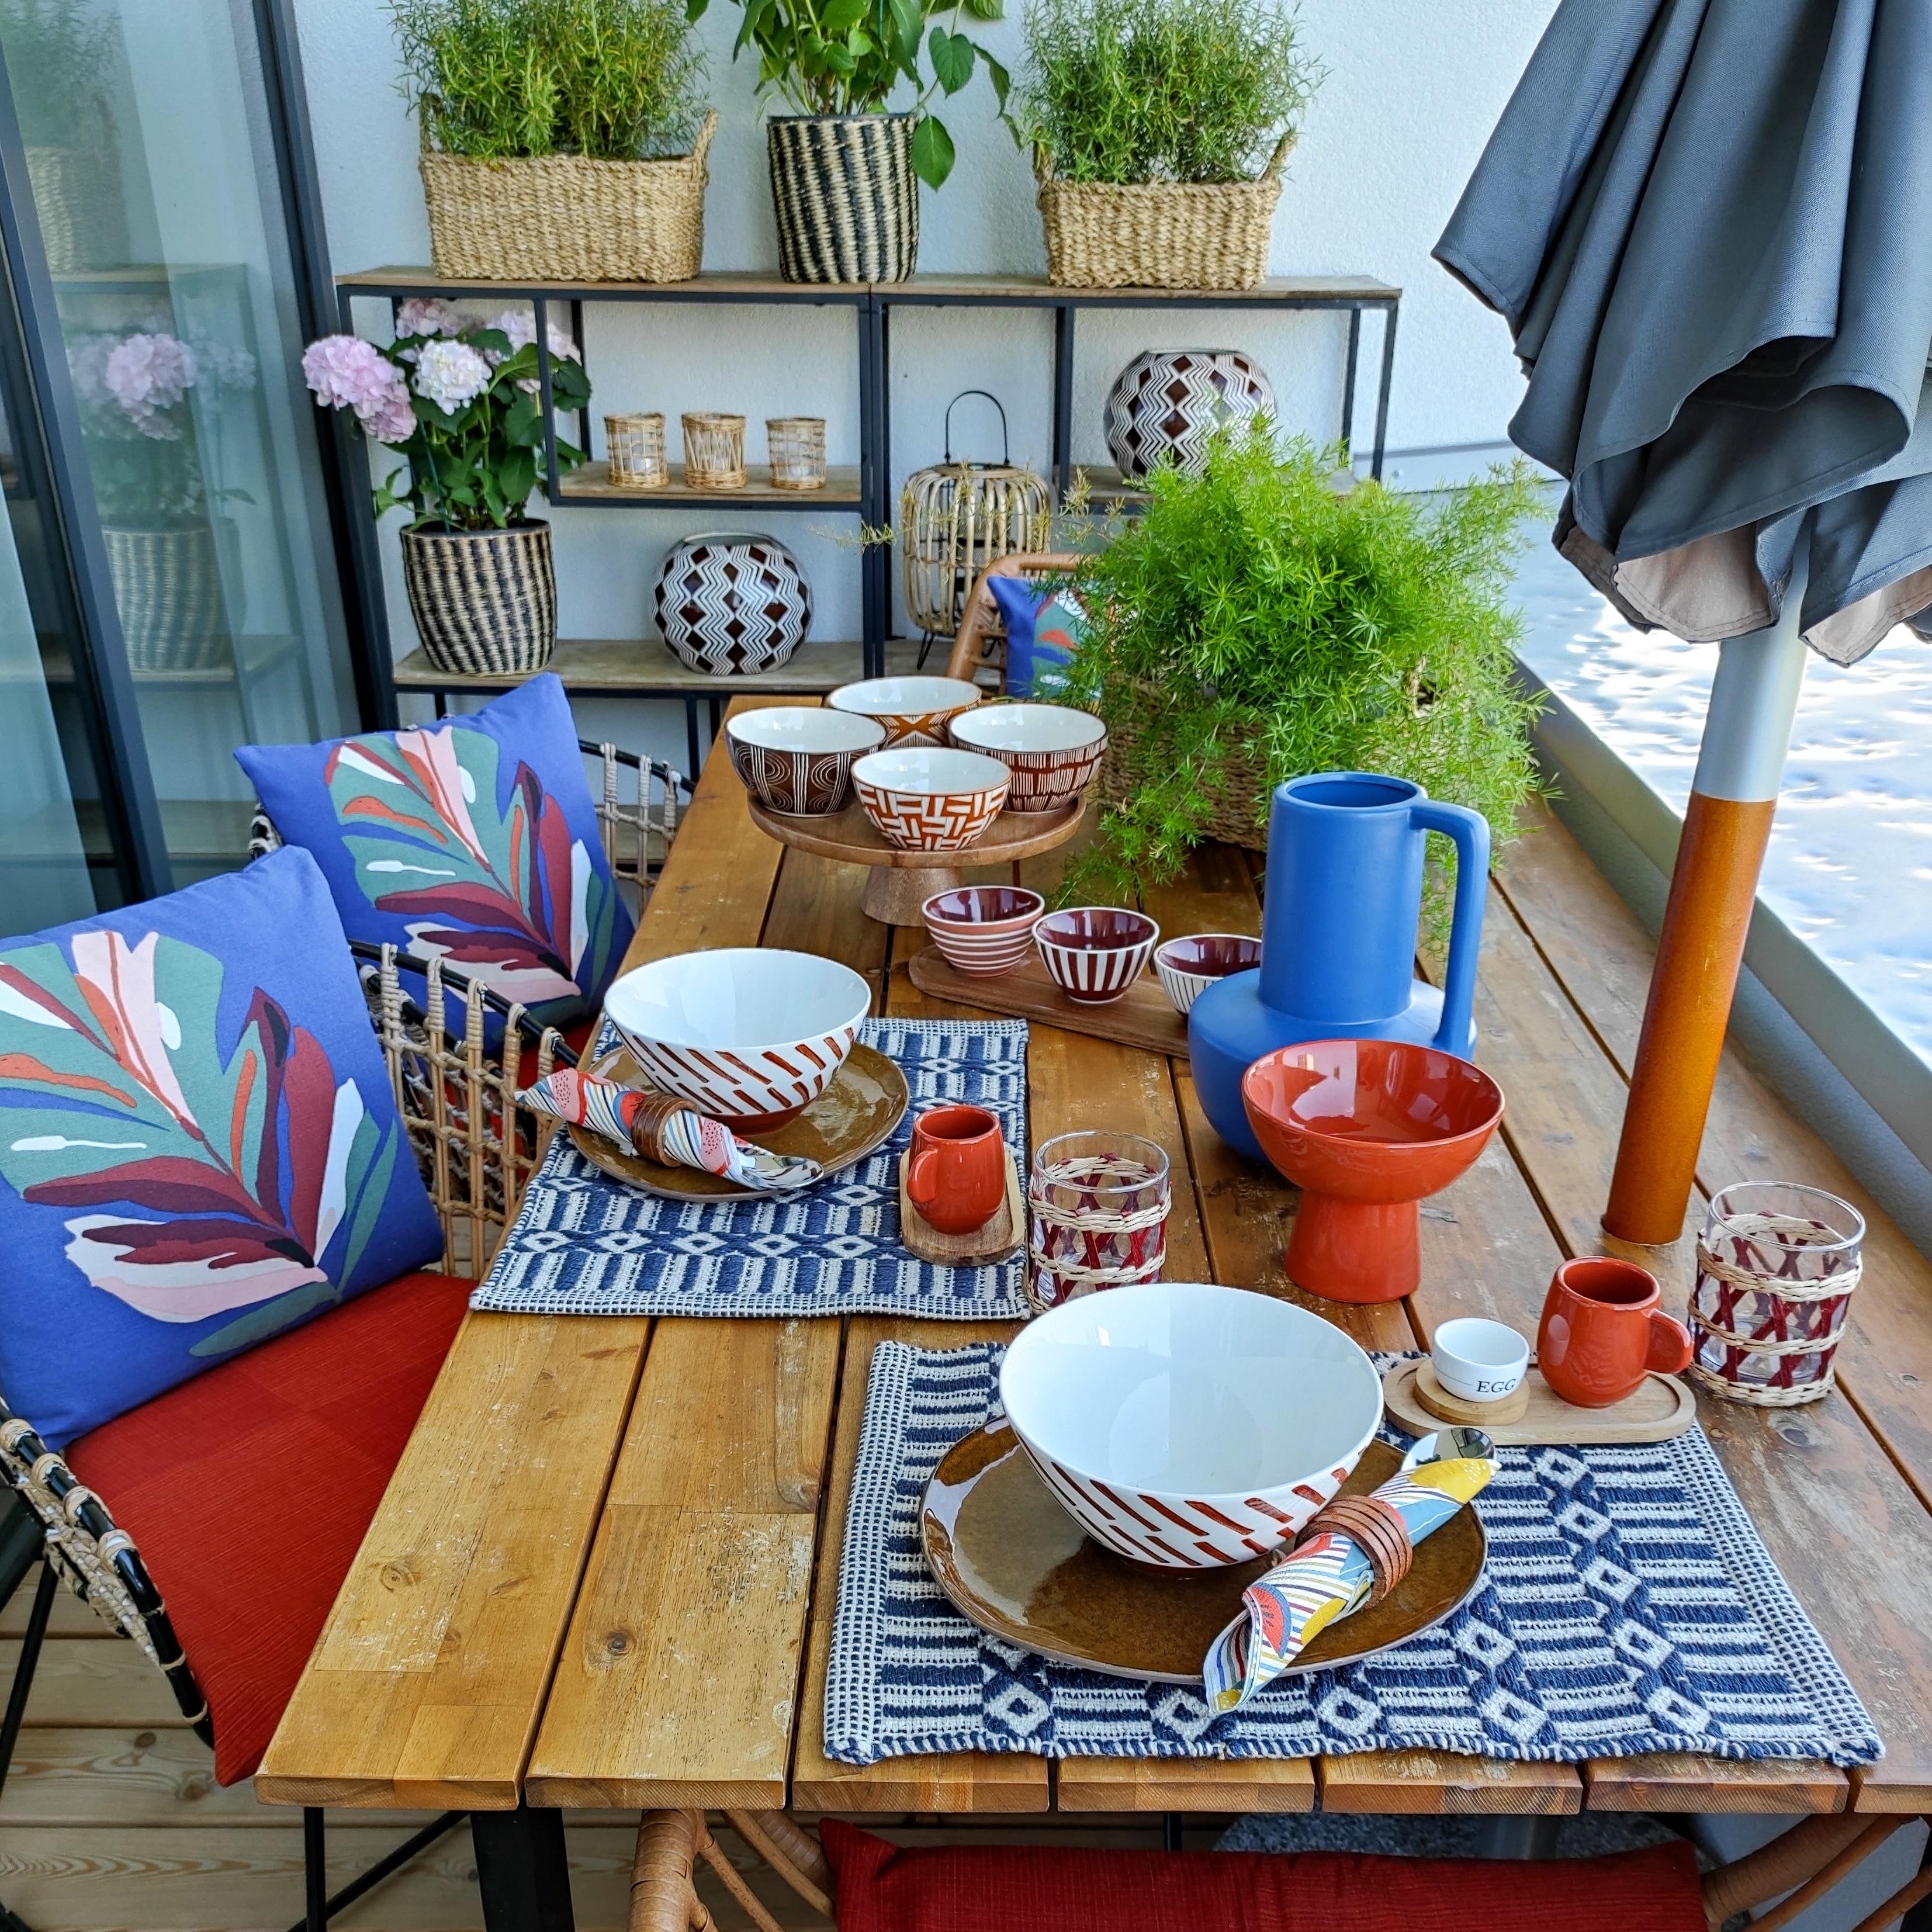 #brunchtime #breakfast #living #home #tischkultur #colour #design #terrasse #nature #summer #summervibes #look #fresh